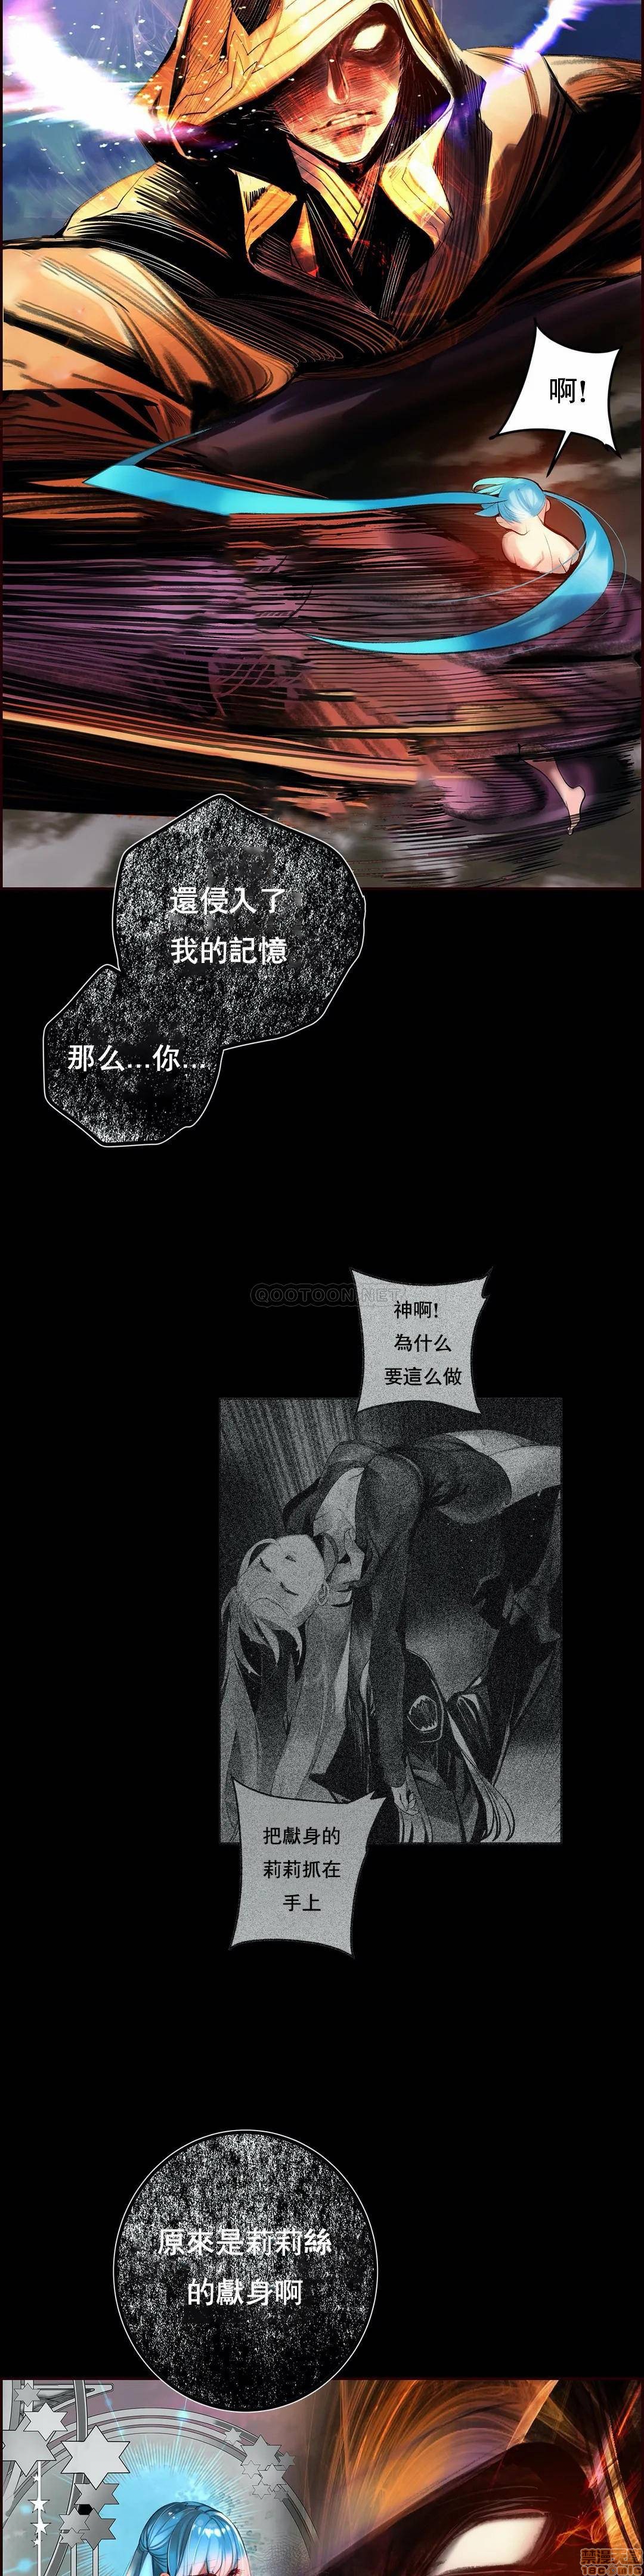 [Juder] Lilith`s Cord (莉莉丝的脐带第二季) Ch.77-93完结 [Chinese]